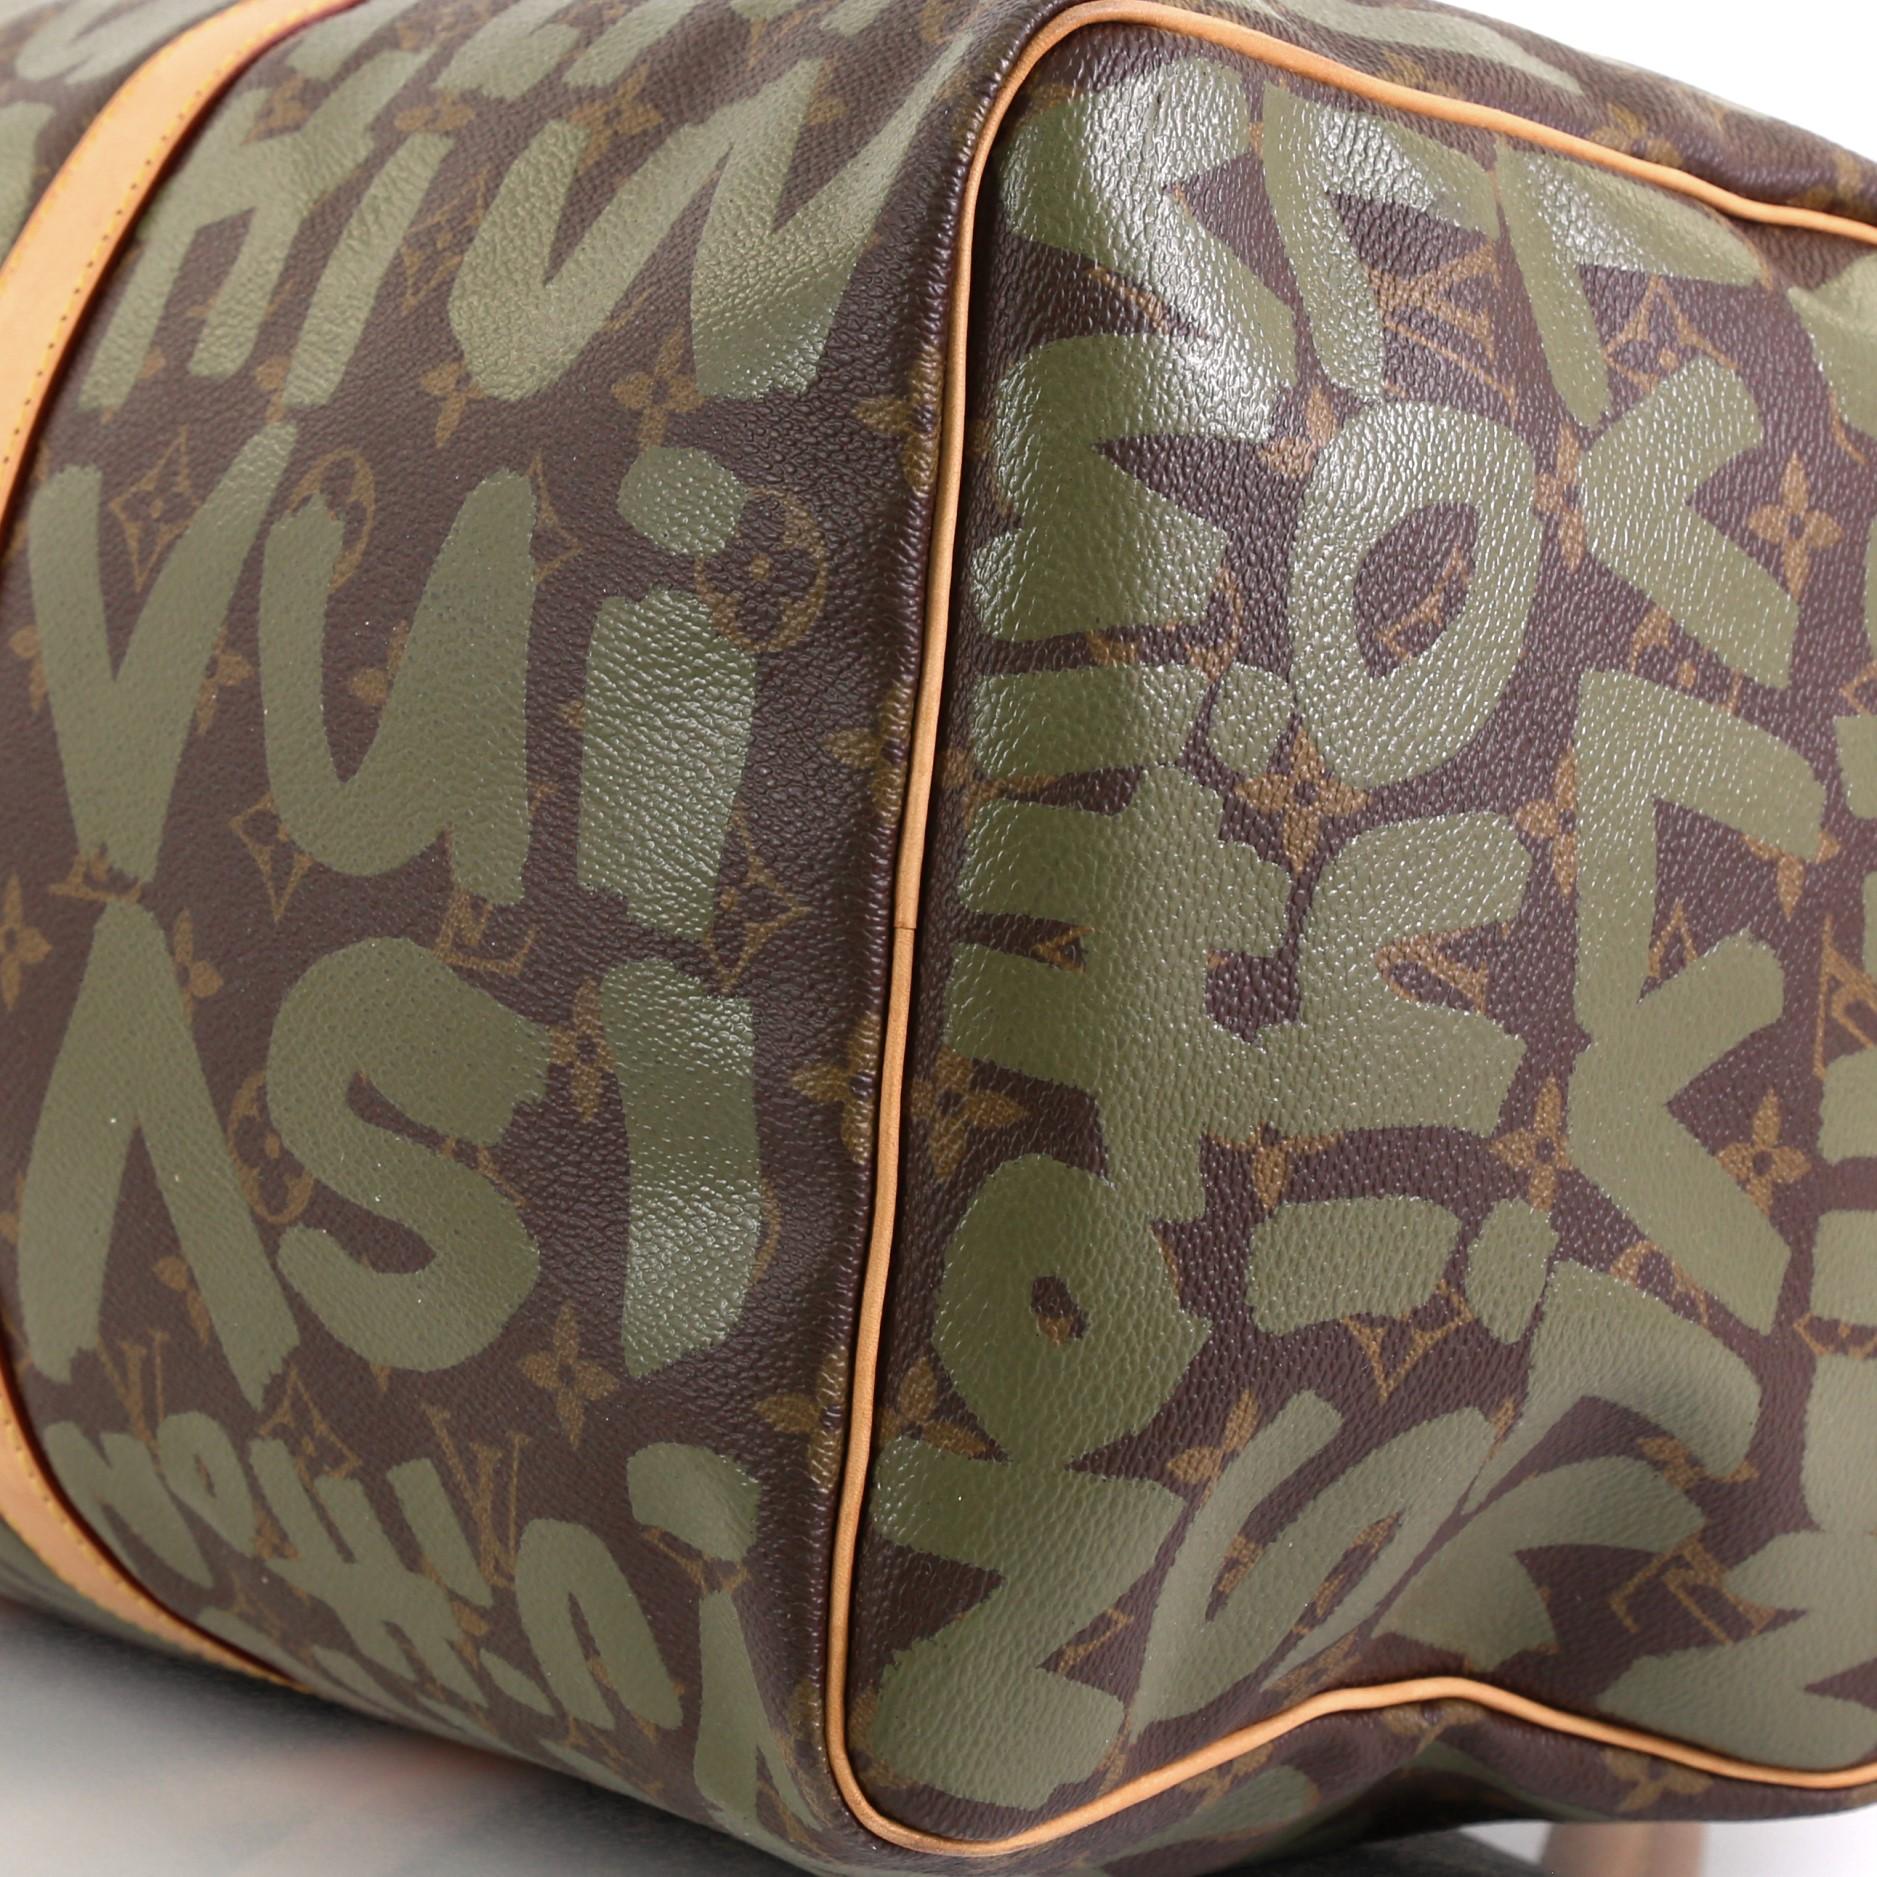 Louis Vuitton Keepall Bag Limited Edition Monogram Graffiti 50 2